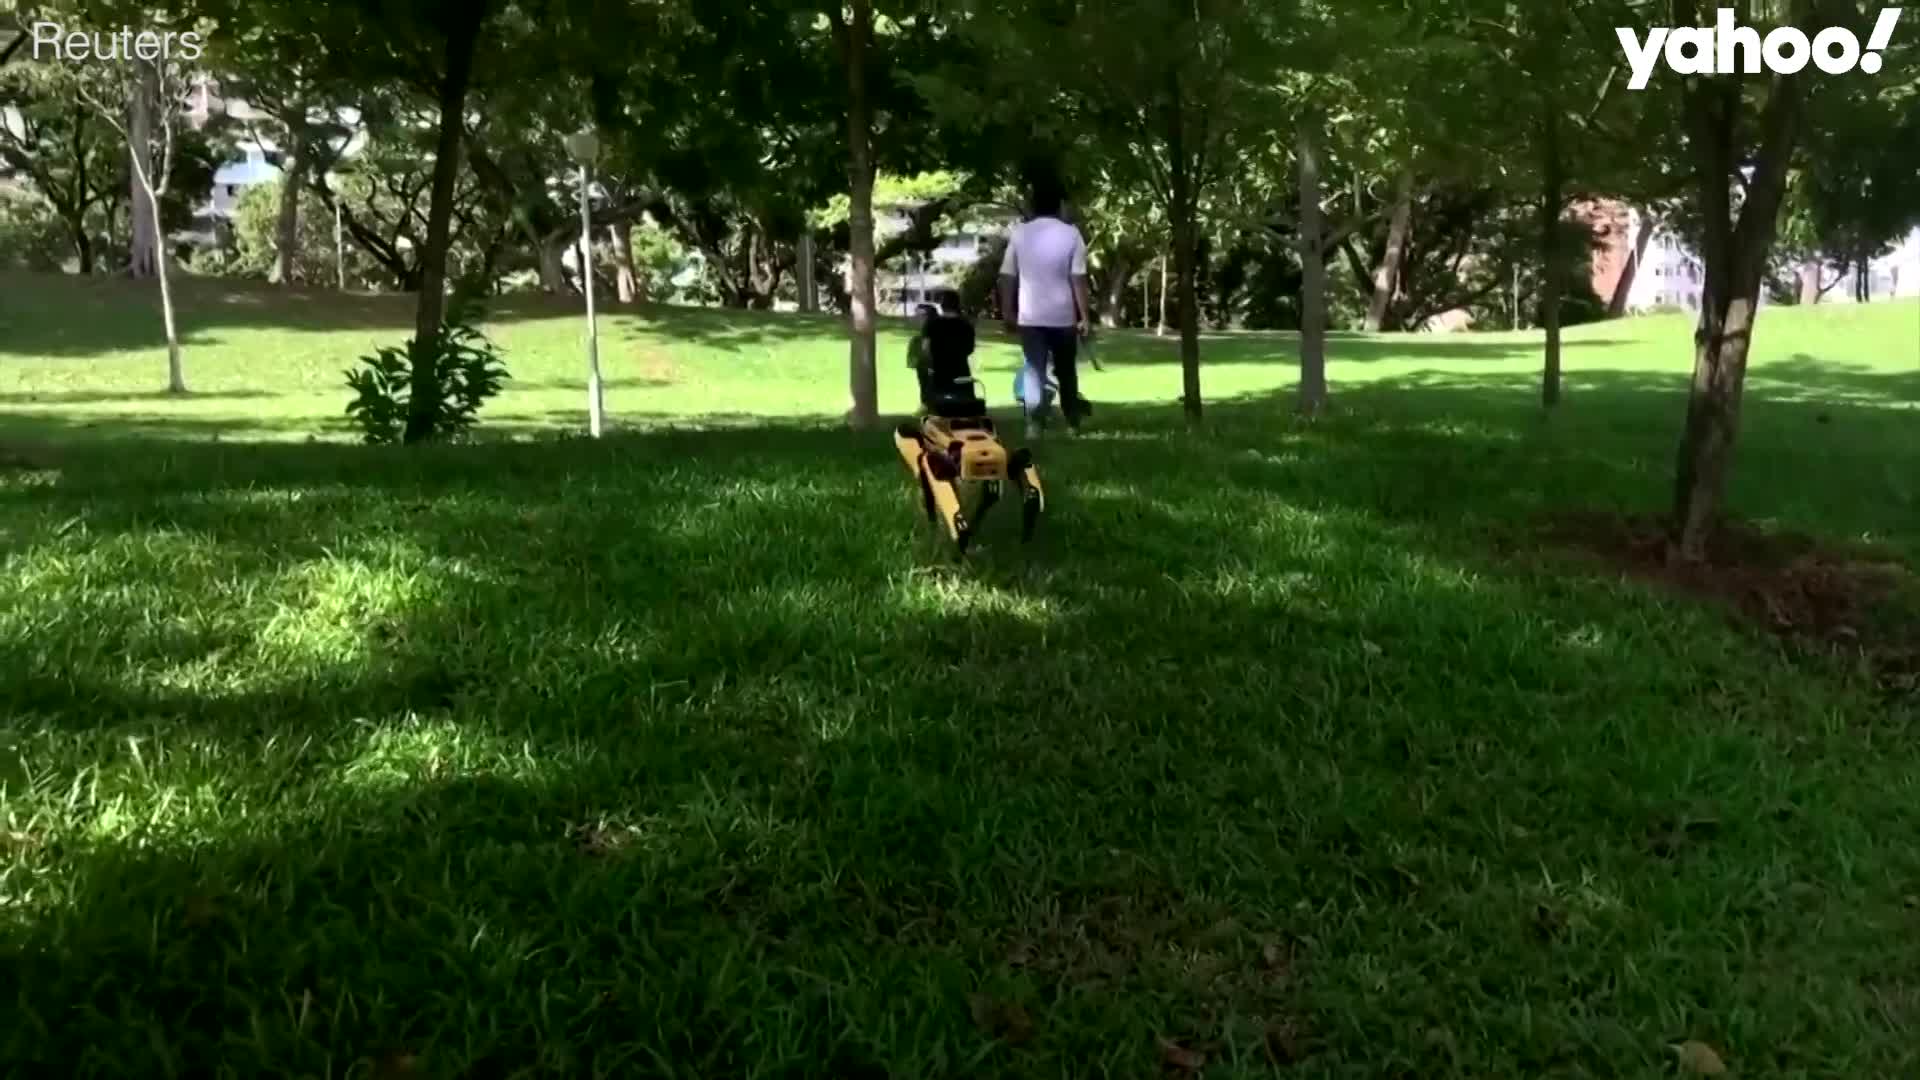 Robot dog in Singapore enforcing coronavirus lockdown restrictions in city's parks